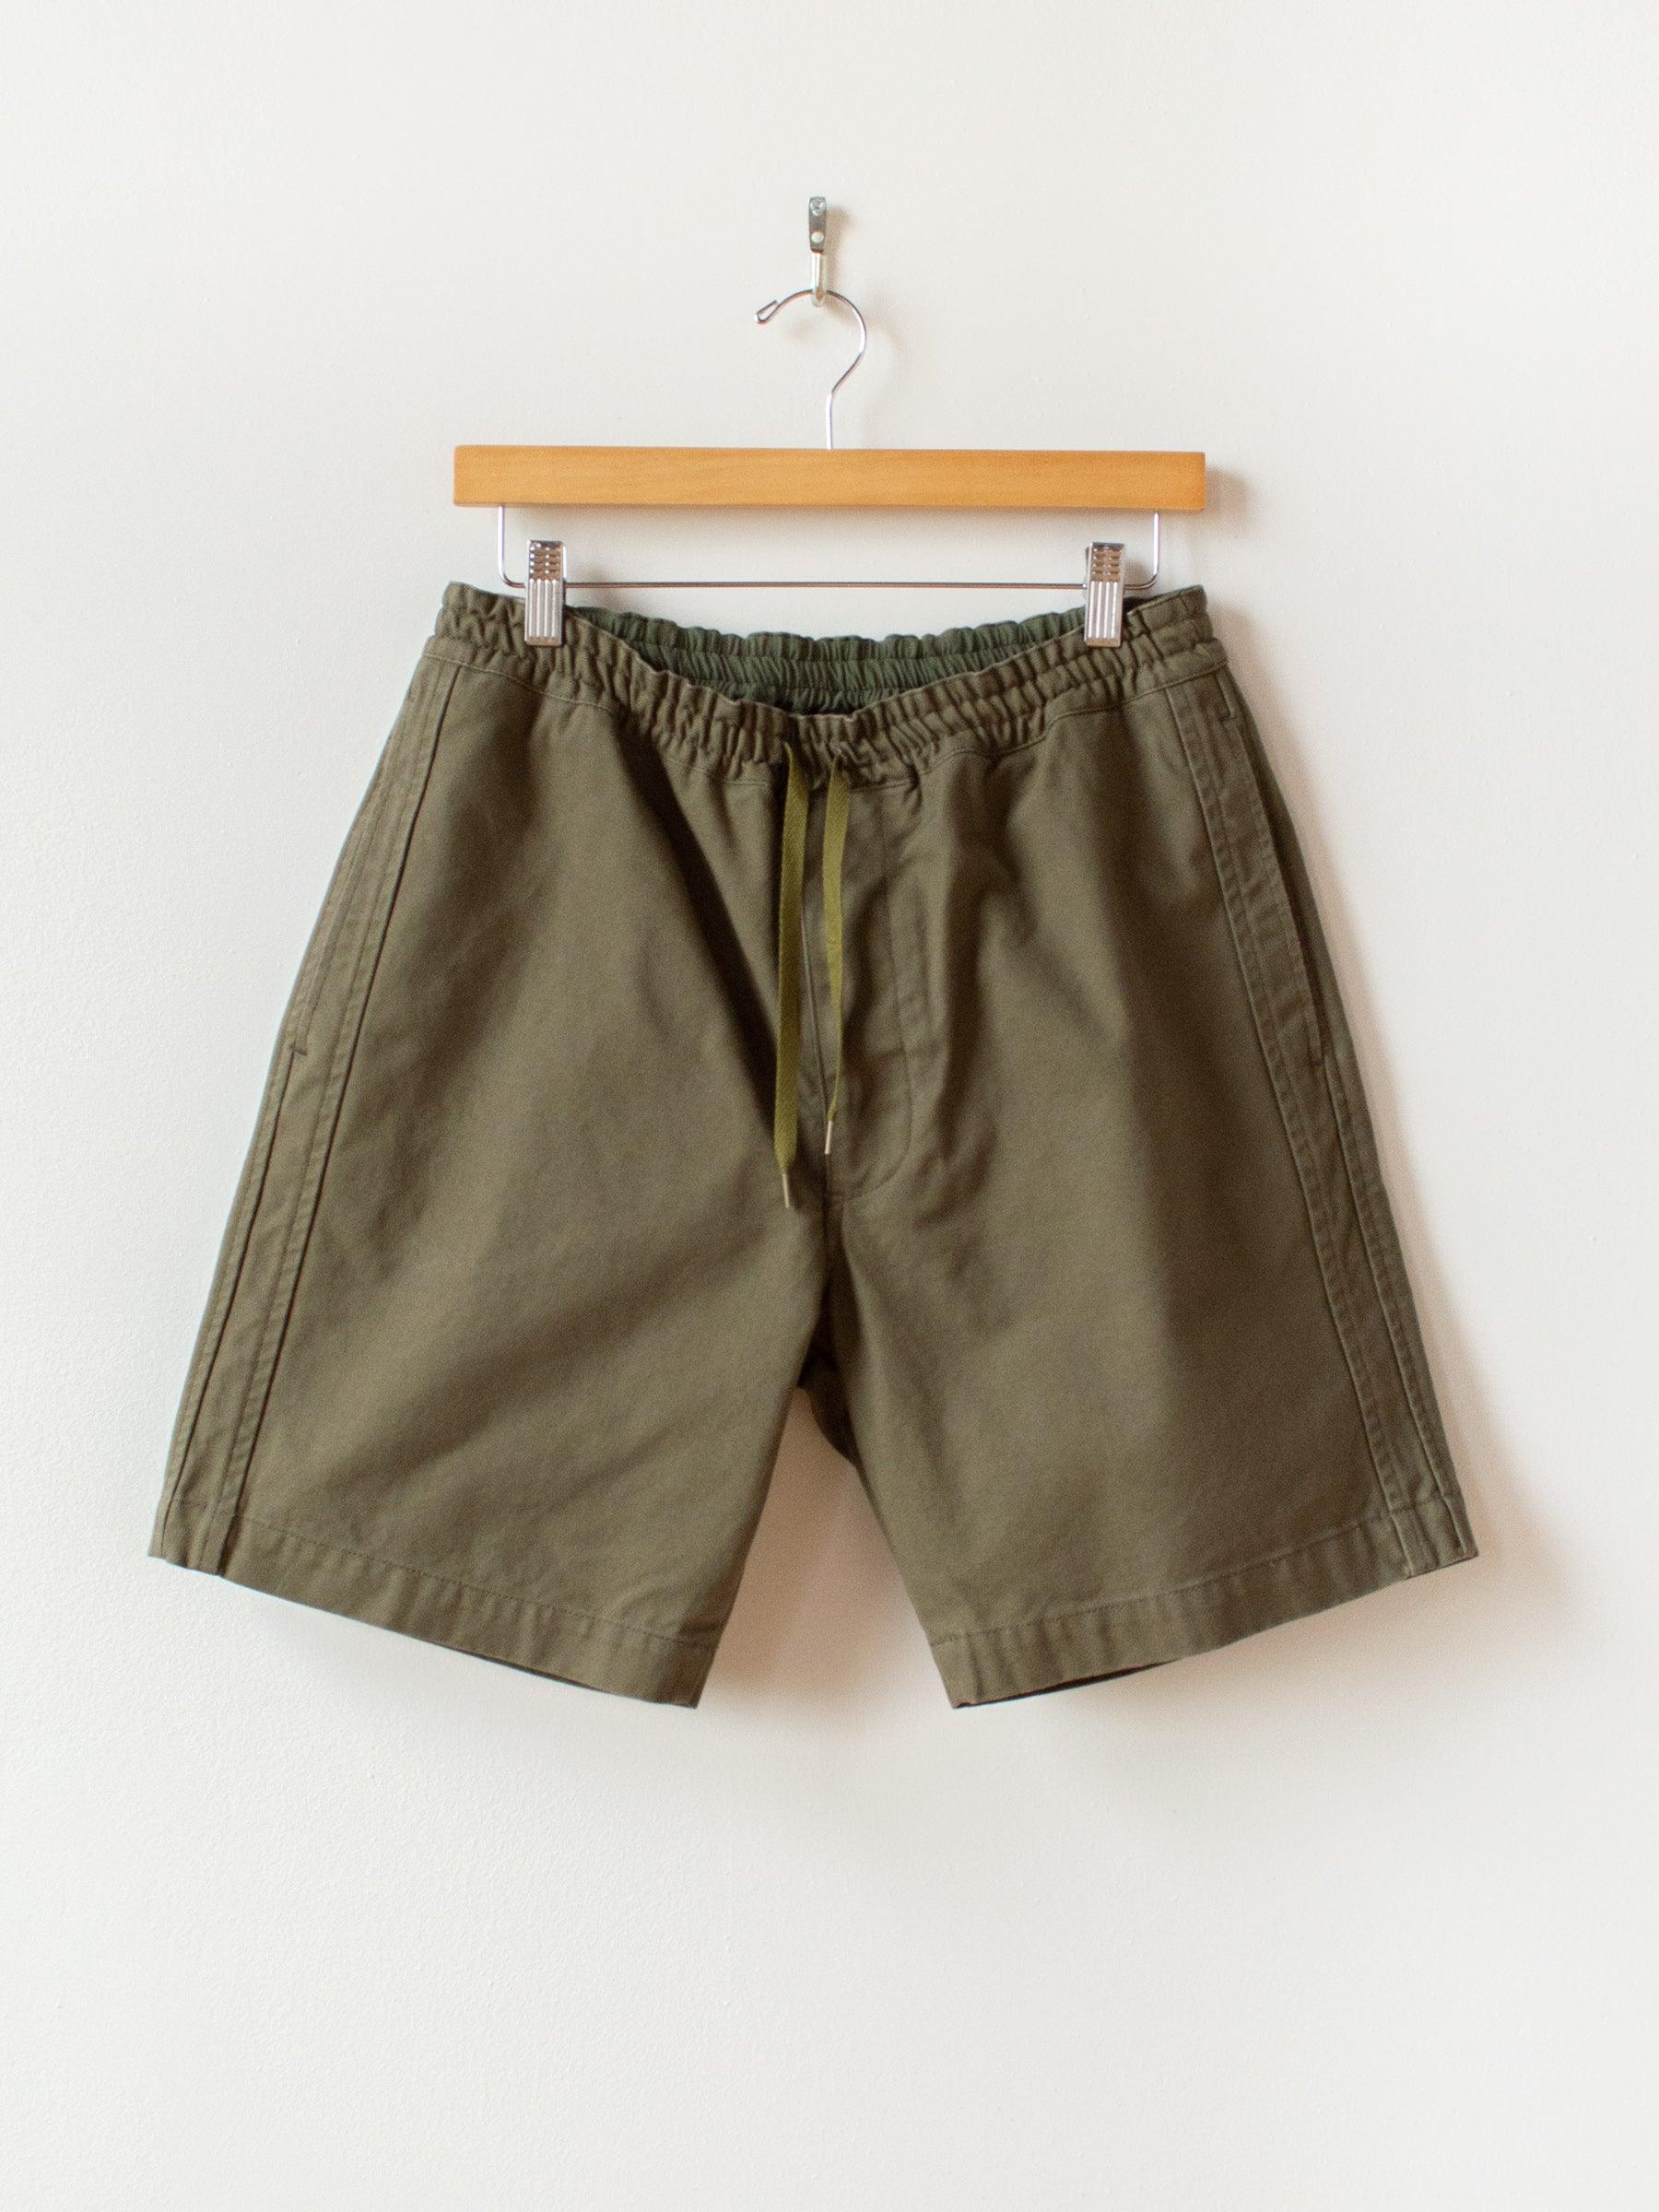 Namu Shop - Fujito Line Easy Shorts - Olive